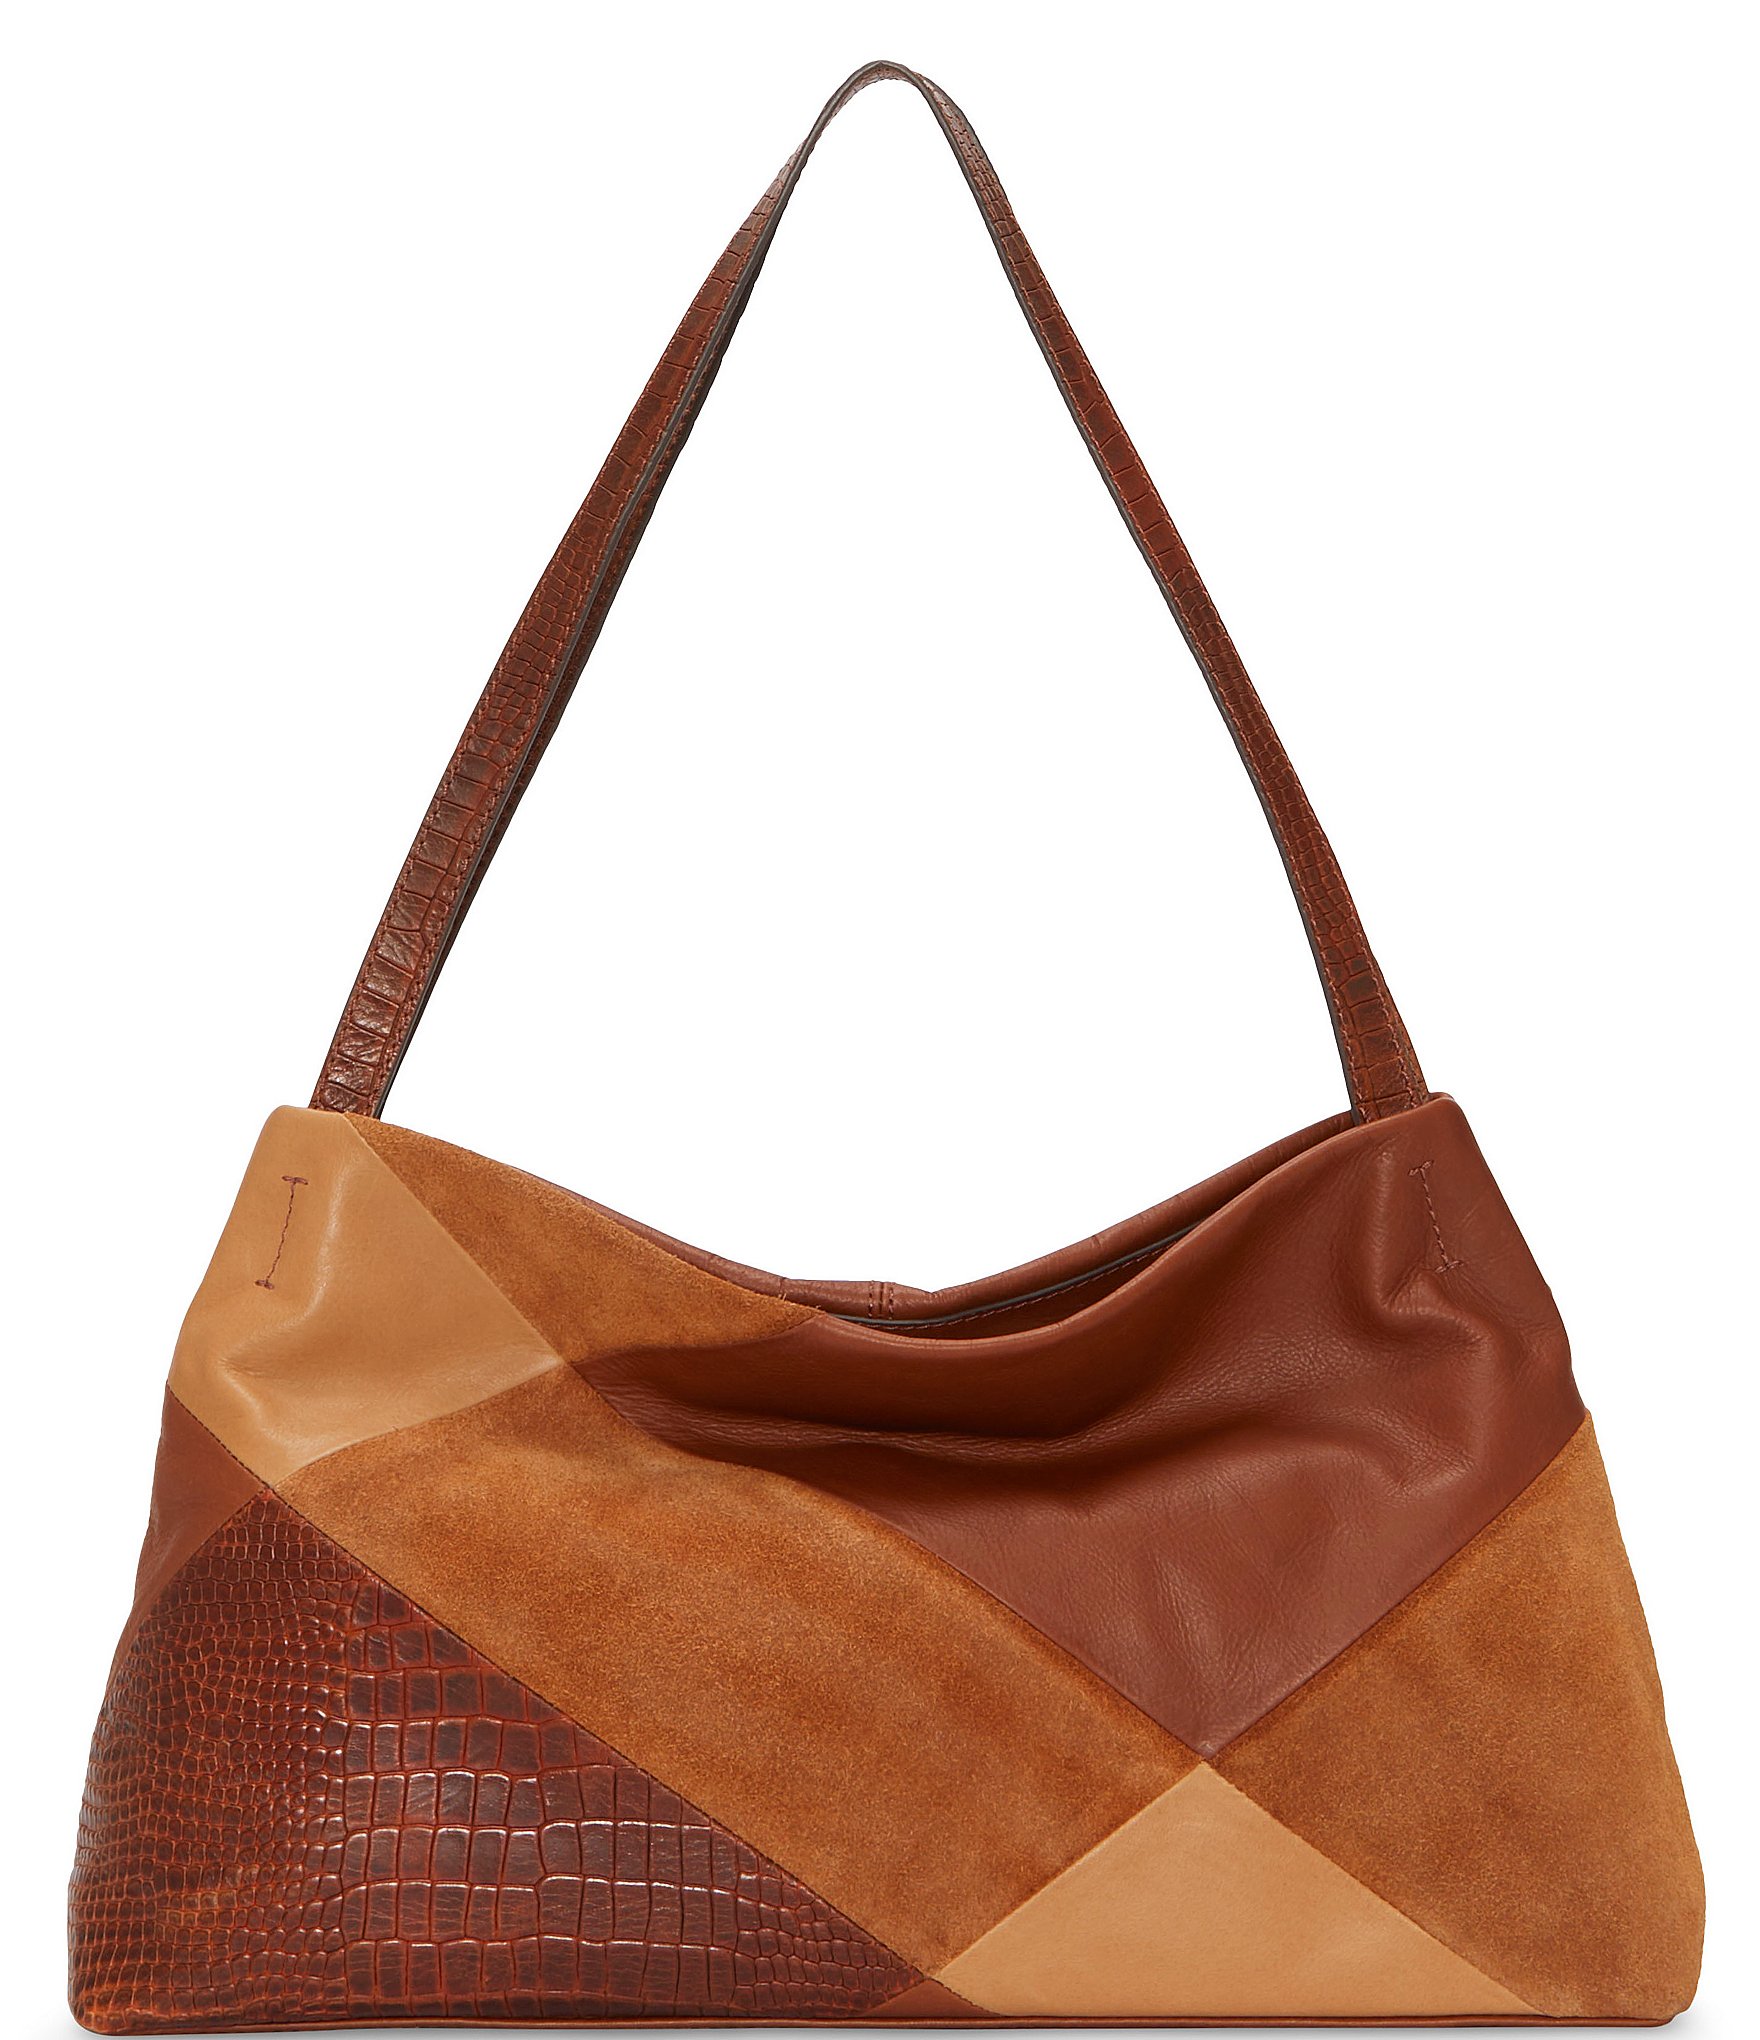 LUCKY BRAND Leather Purse PATCHWORK Shoulder Bag Patchwork Hobo | eBay